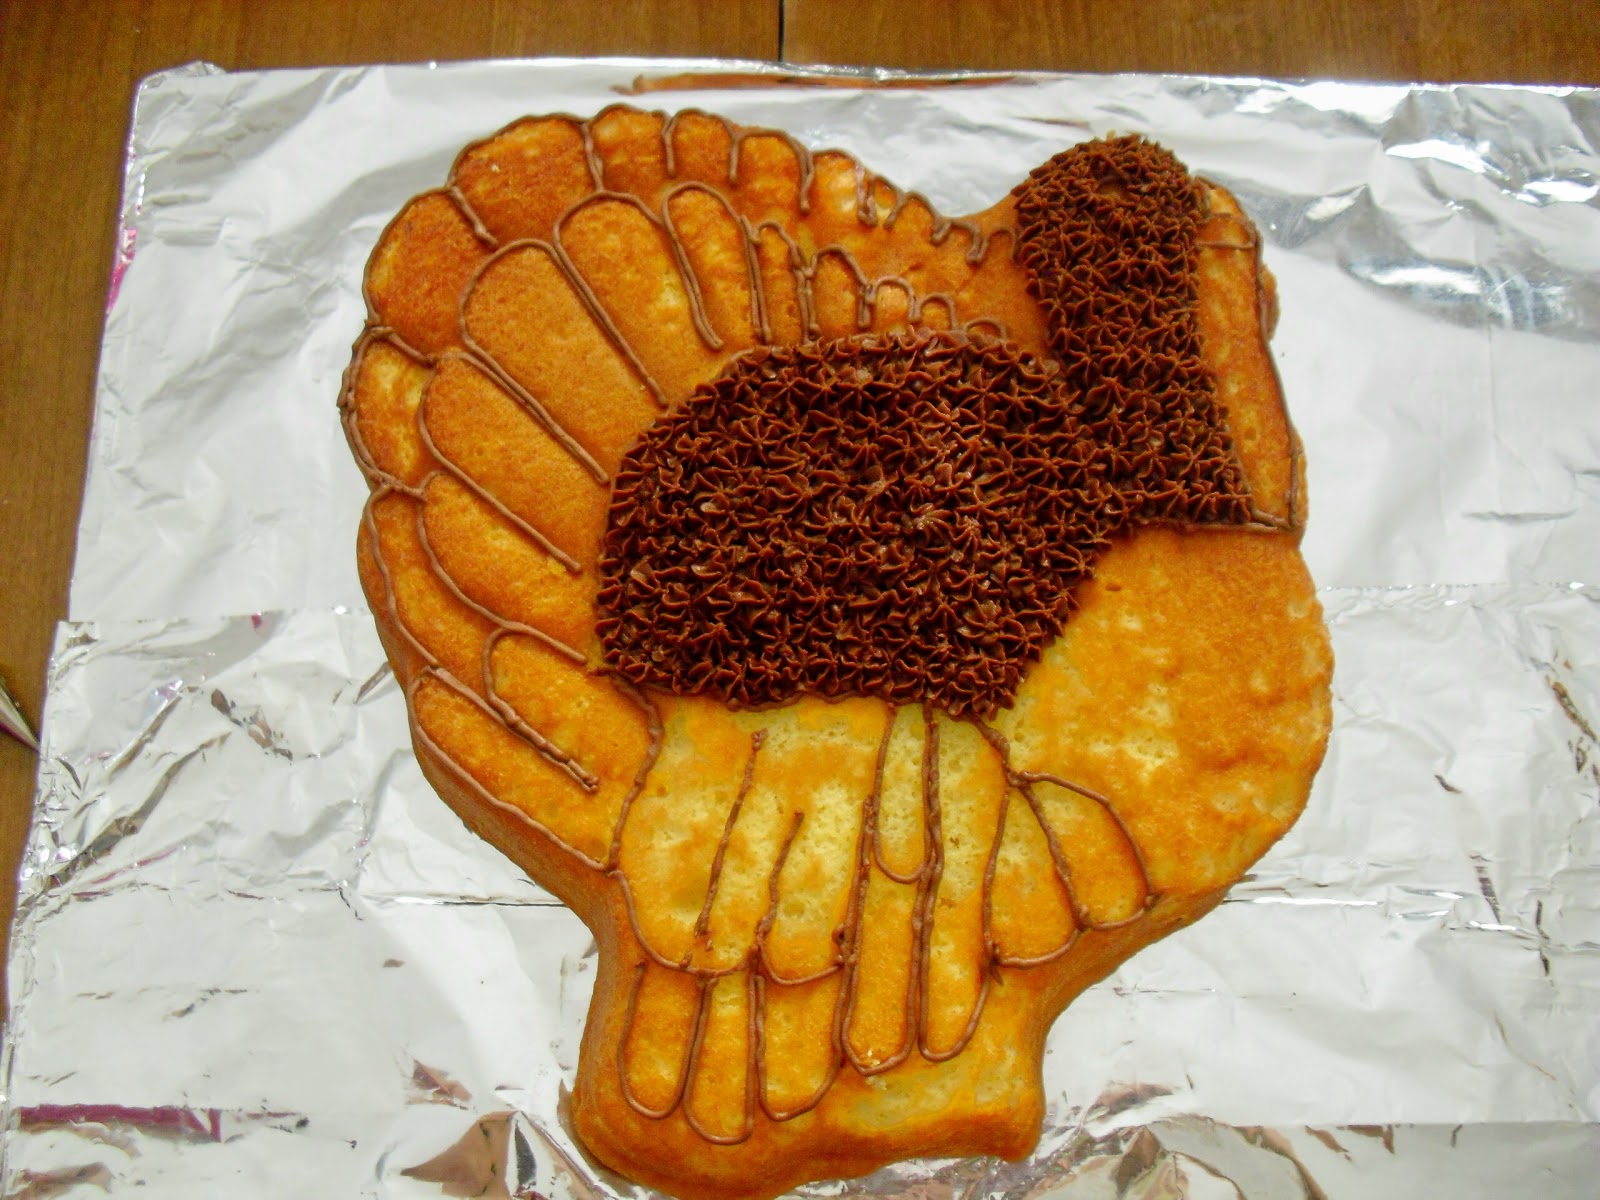 DIY! Wilton's Thanksgiving Turkey Cake! Instructions!